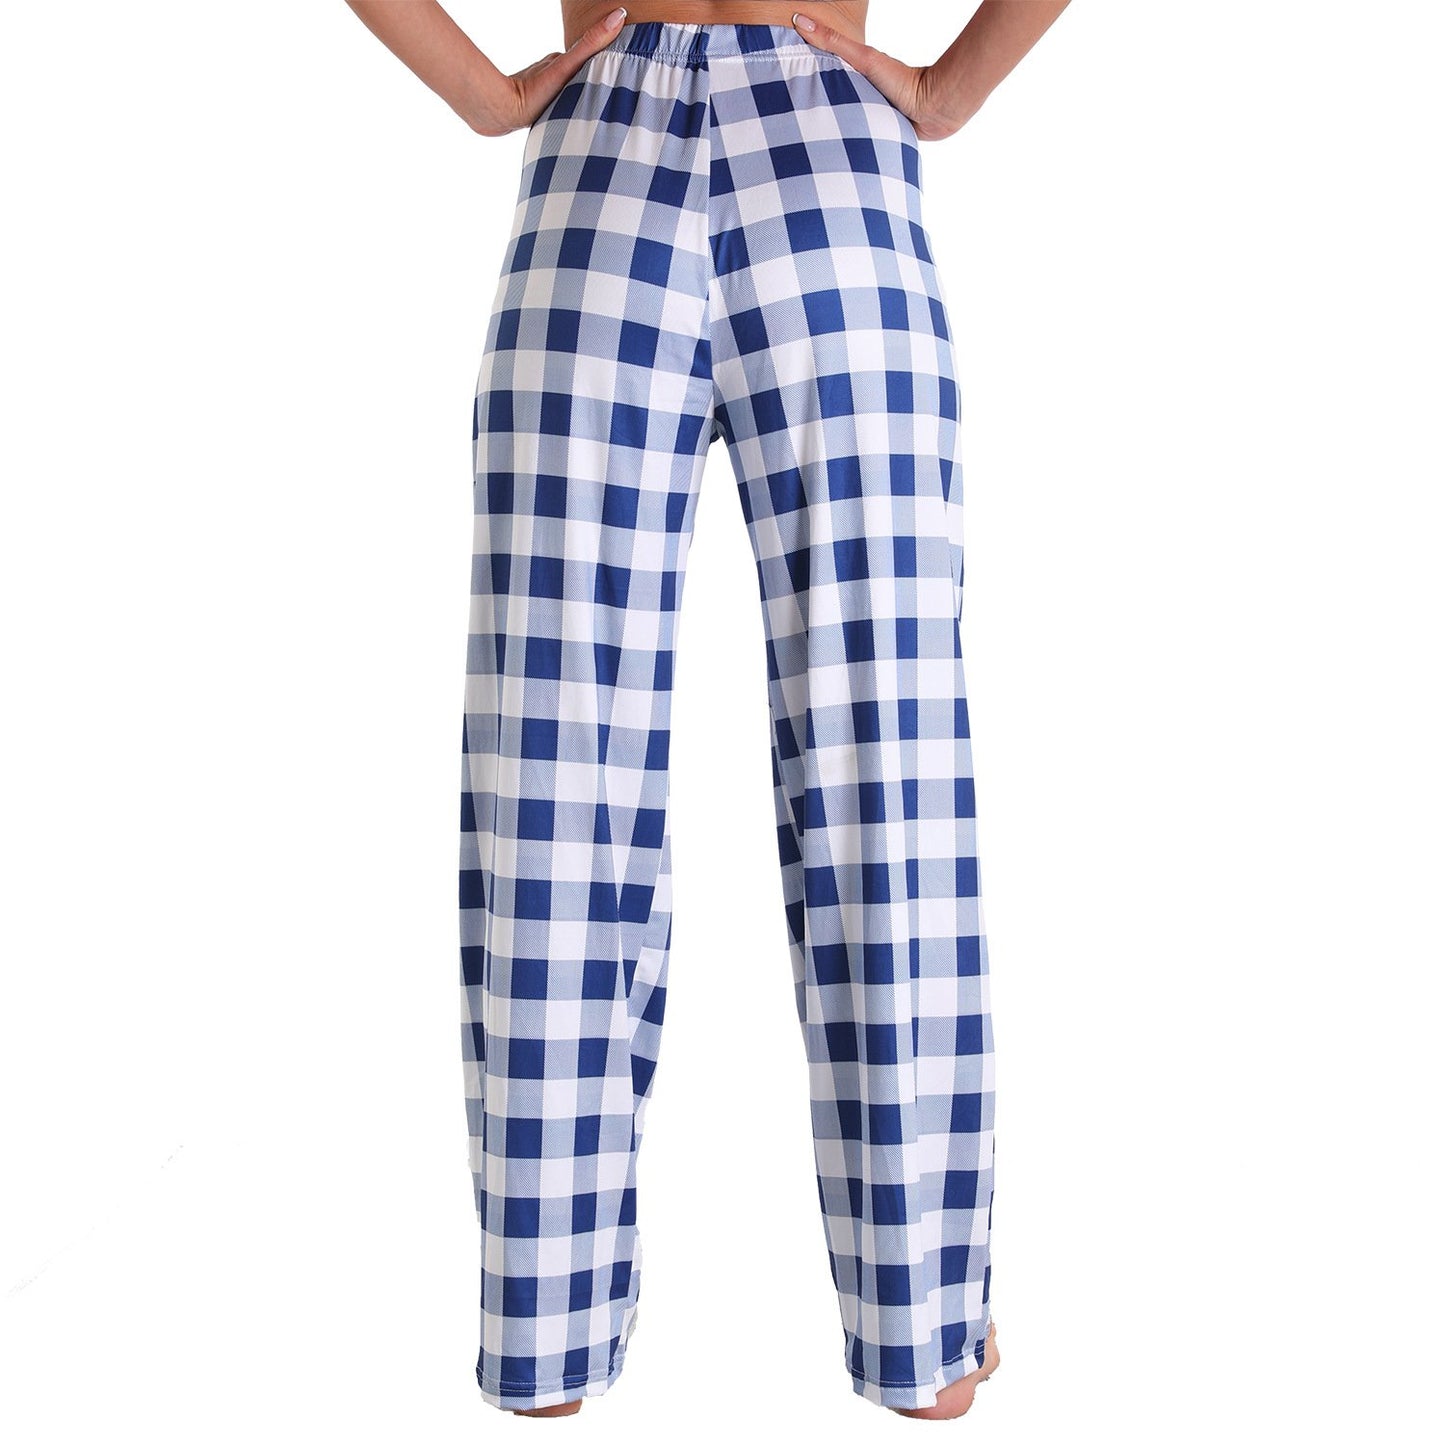 Causal Plaid Women Pajamas Pants Elastic Cord